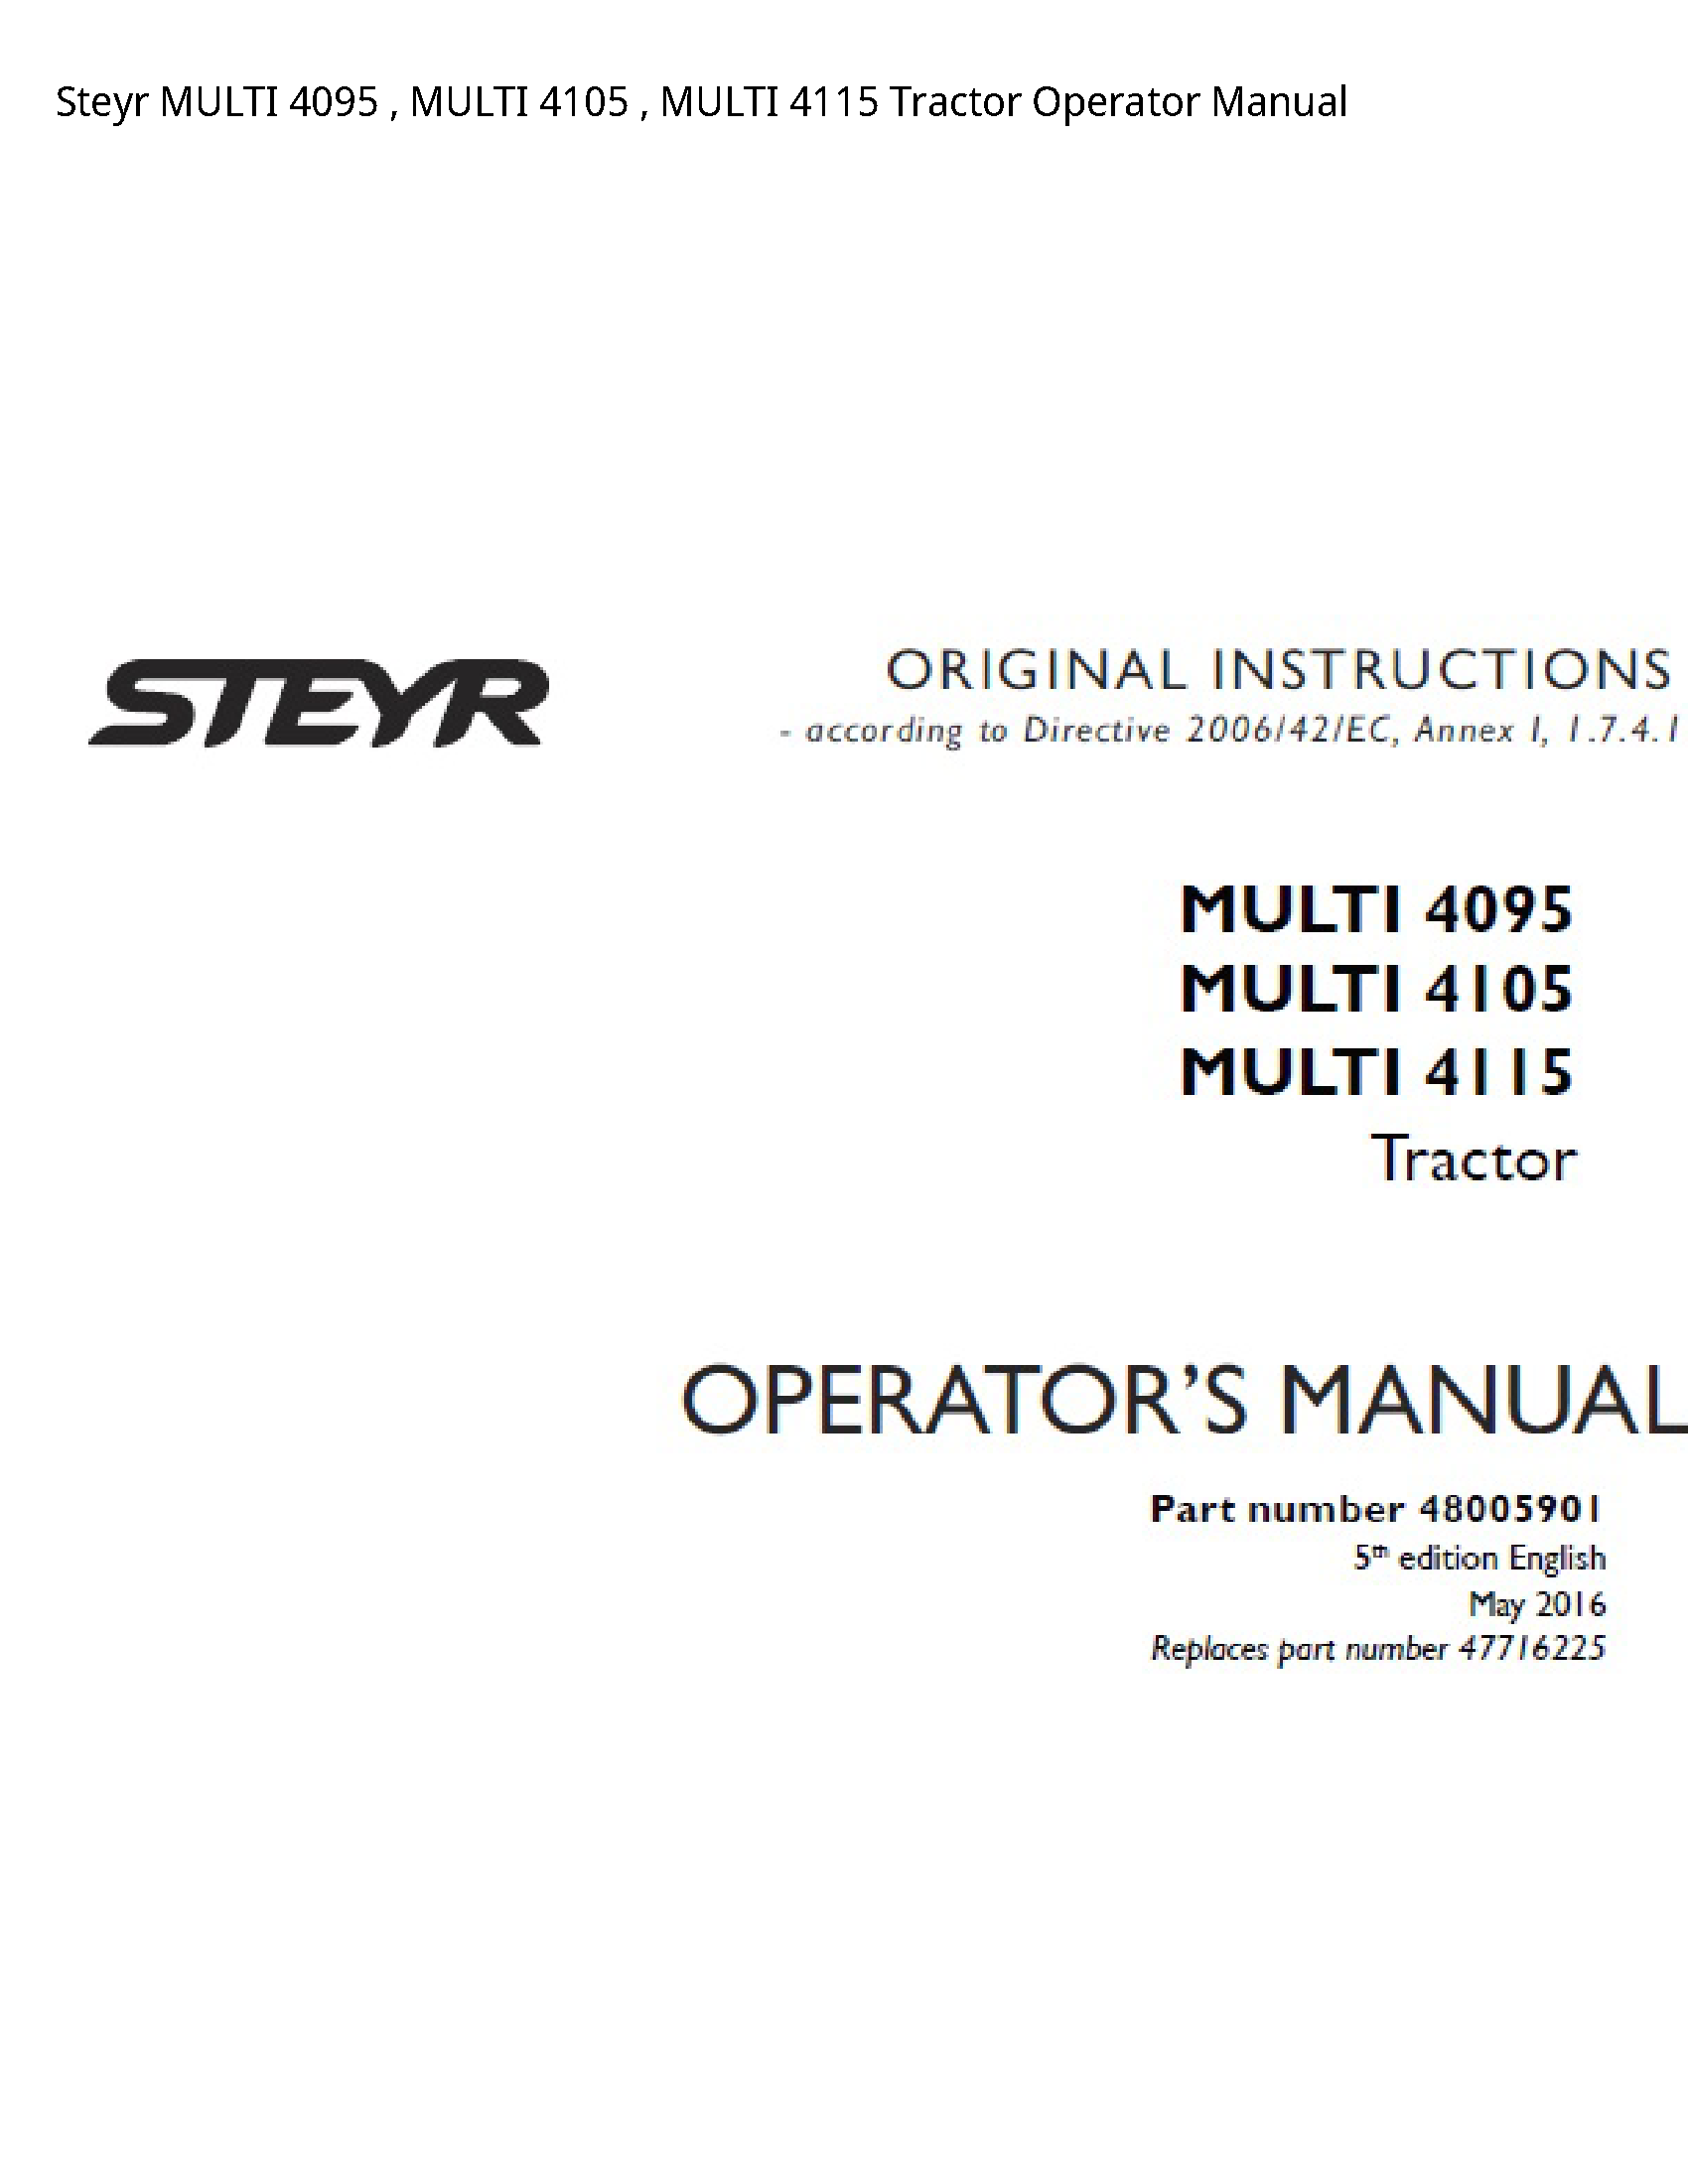 Steyr 4095 MULTI MULTI MULTI Tractor Operator manual